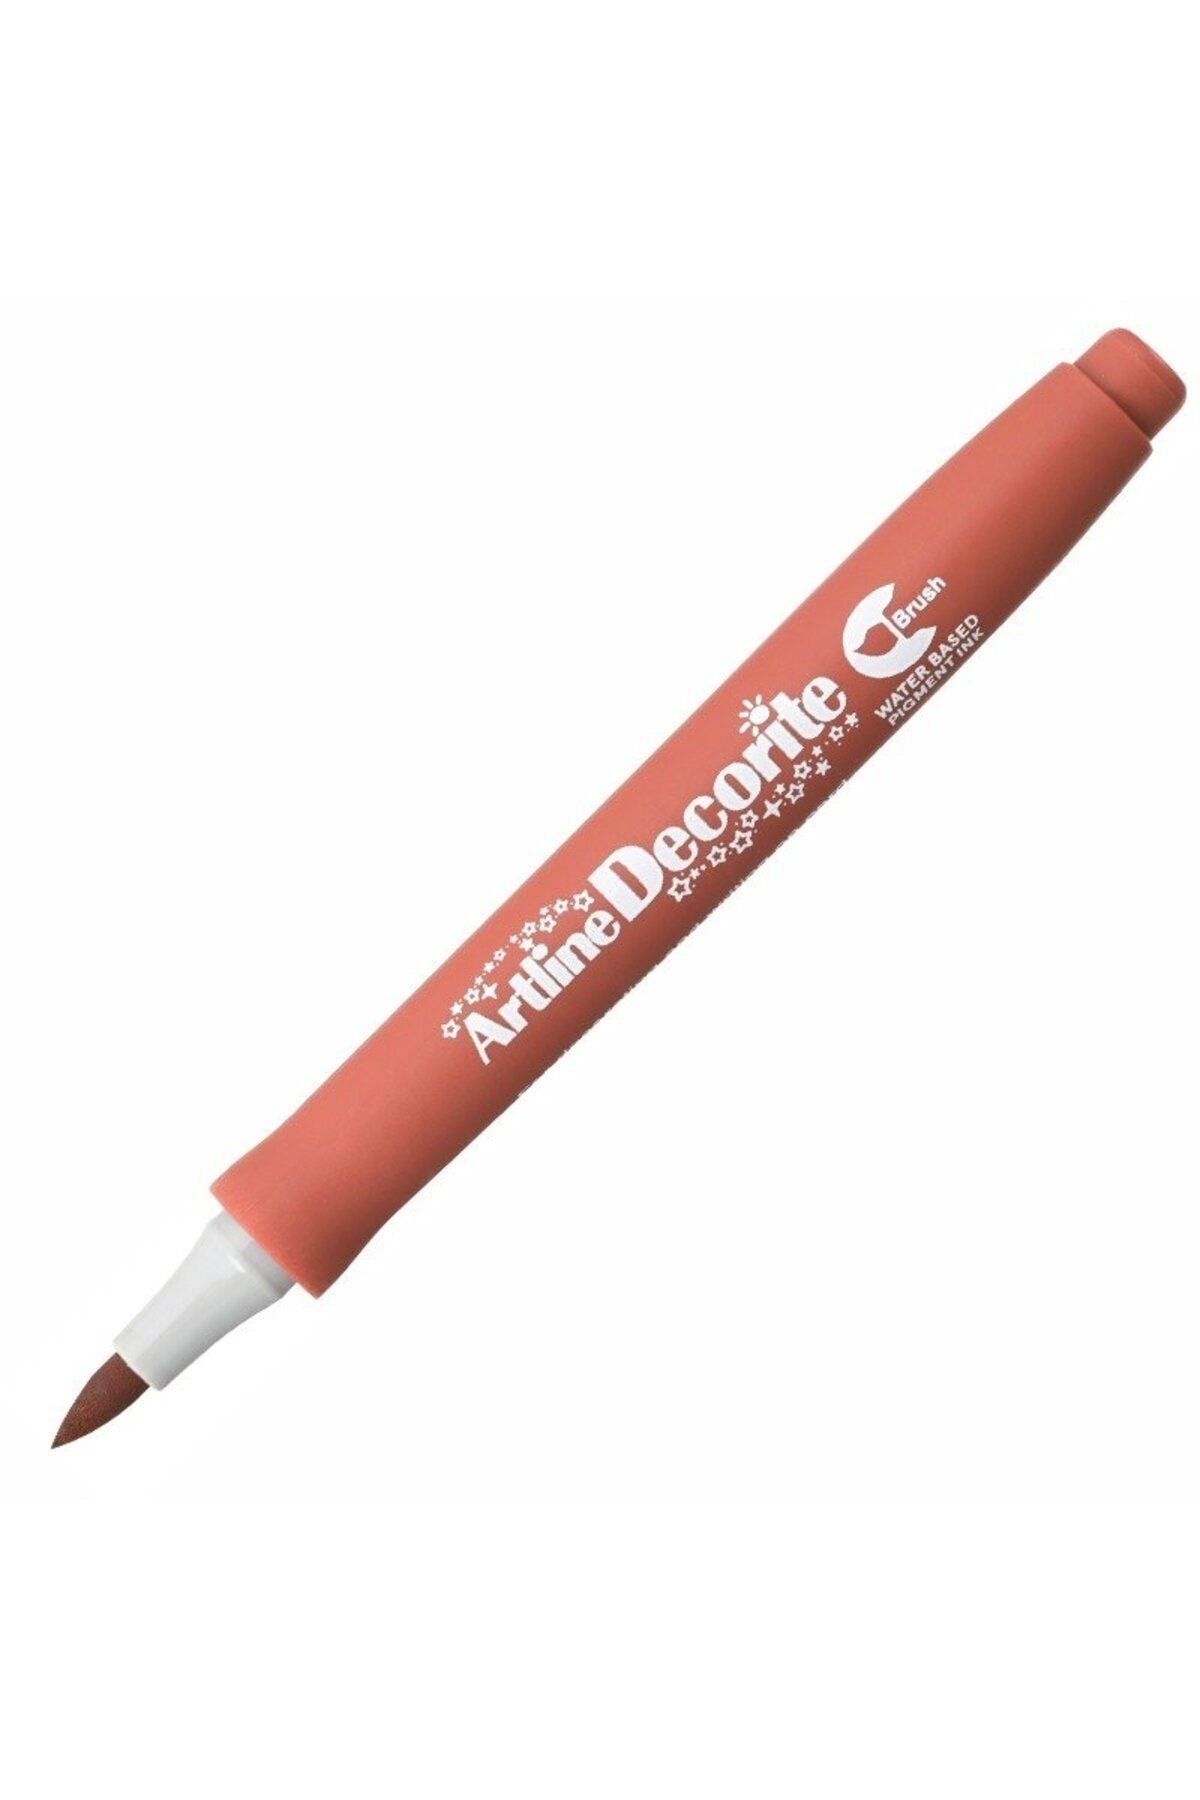 artline Decorite Marker Kalem Fırça Uçlu Brown